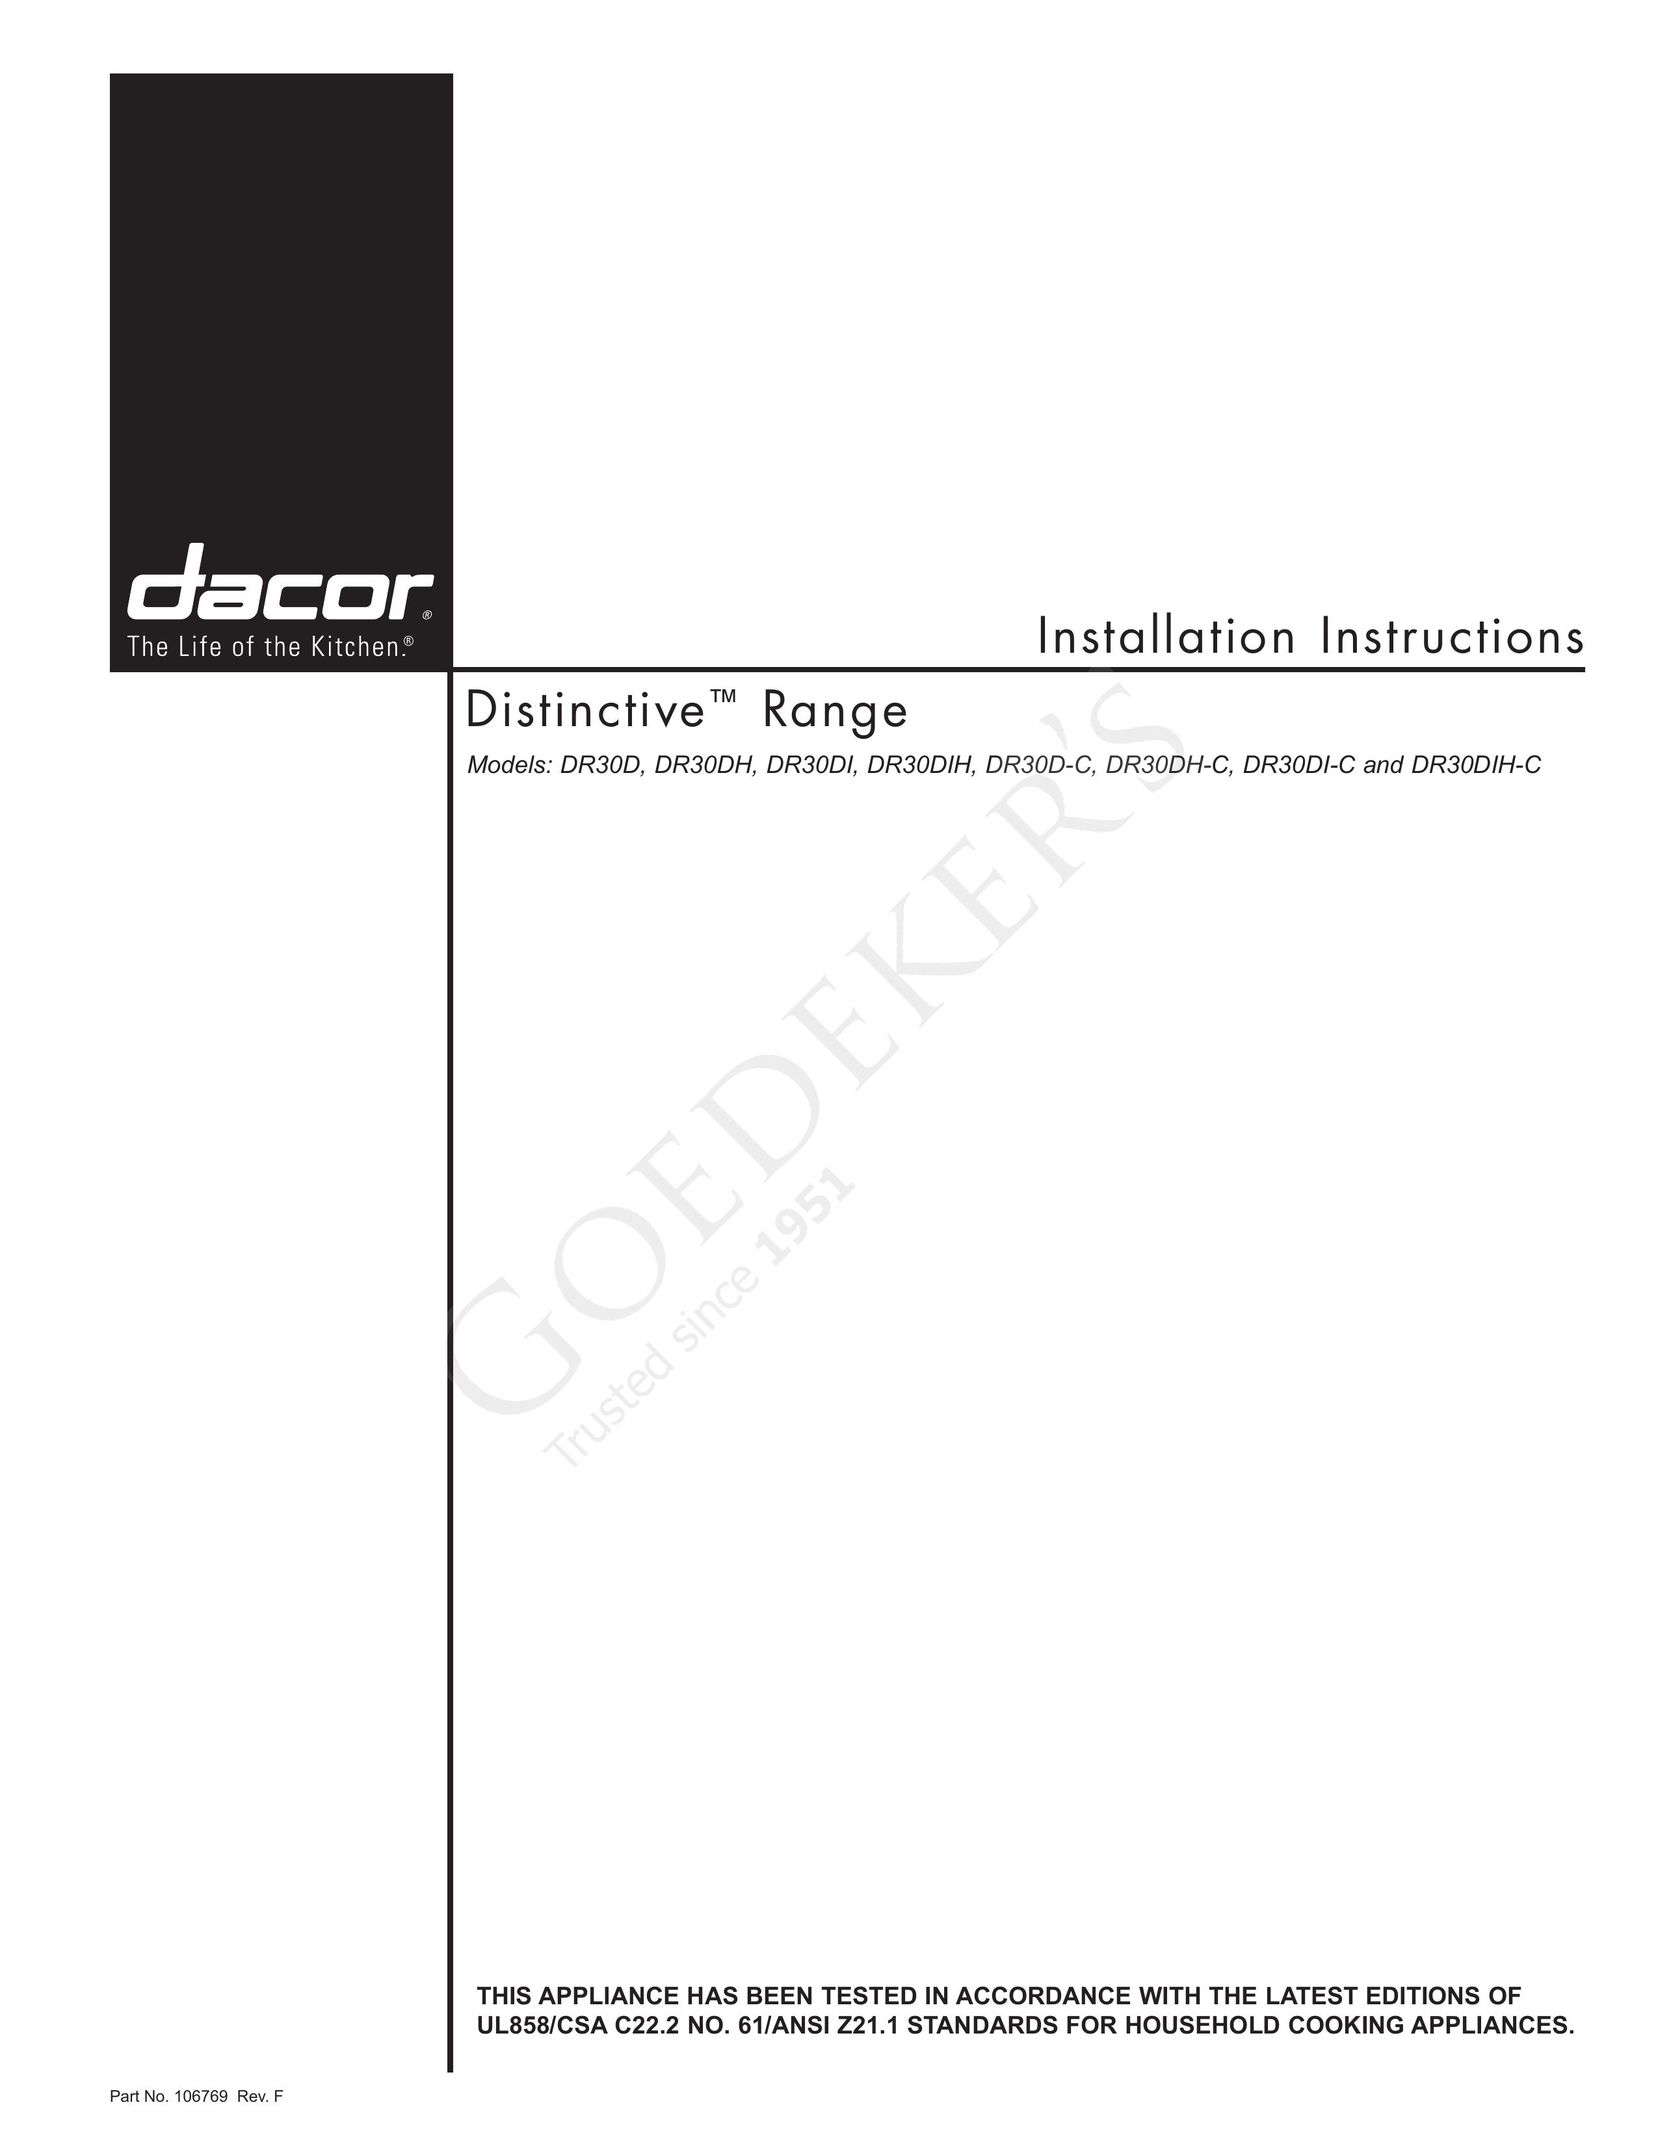 Dacor DR30DIH-C Range User Manual